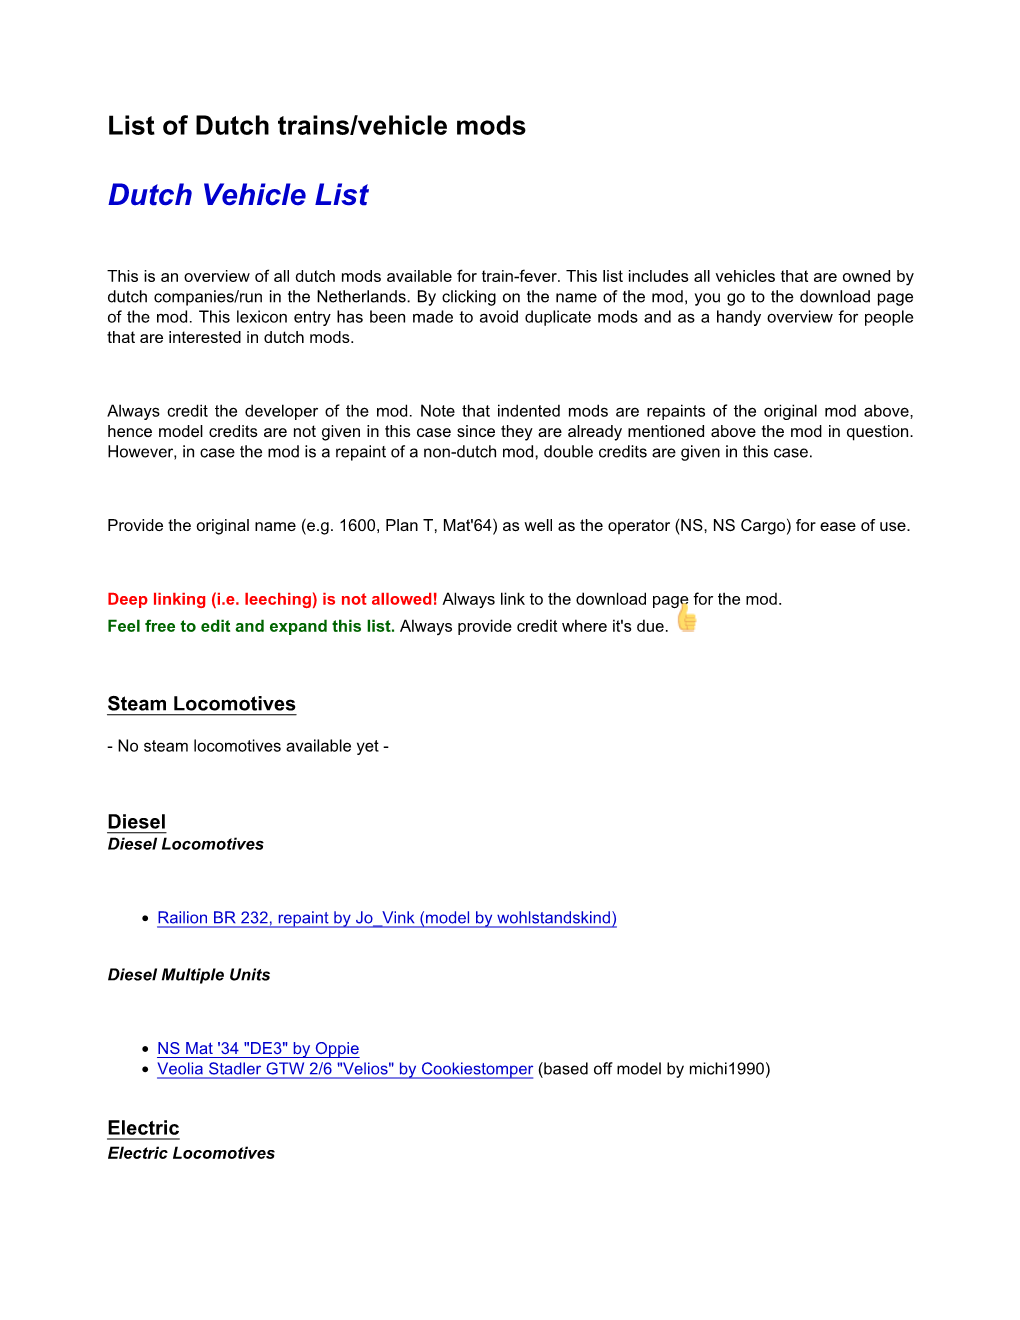 Dutch Vehicle List